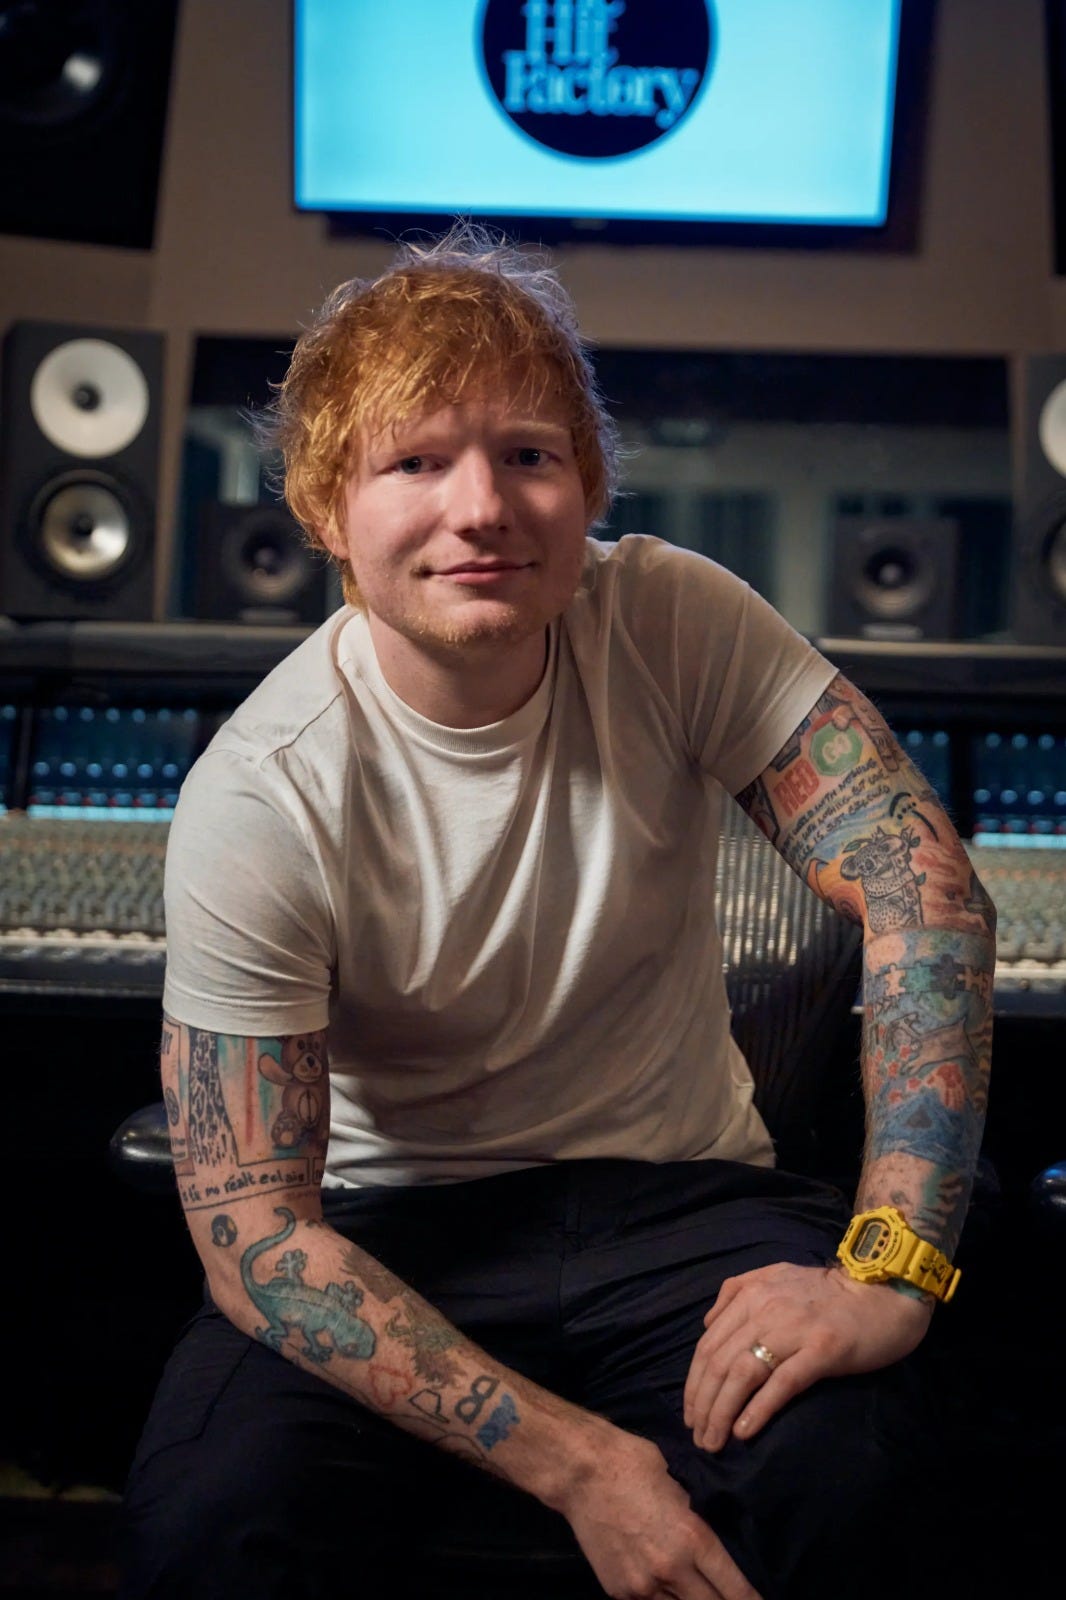 English singer-songwriter Ed Sheeran has partnered with Hodinkee